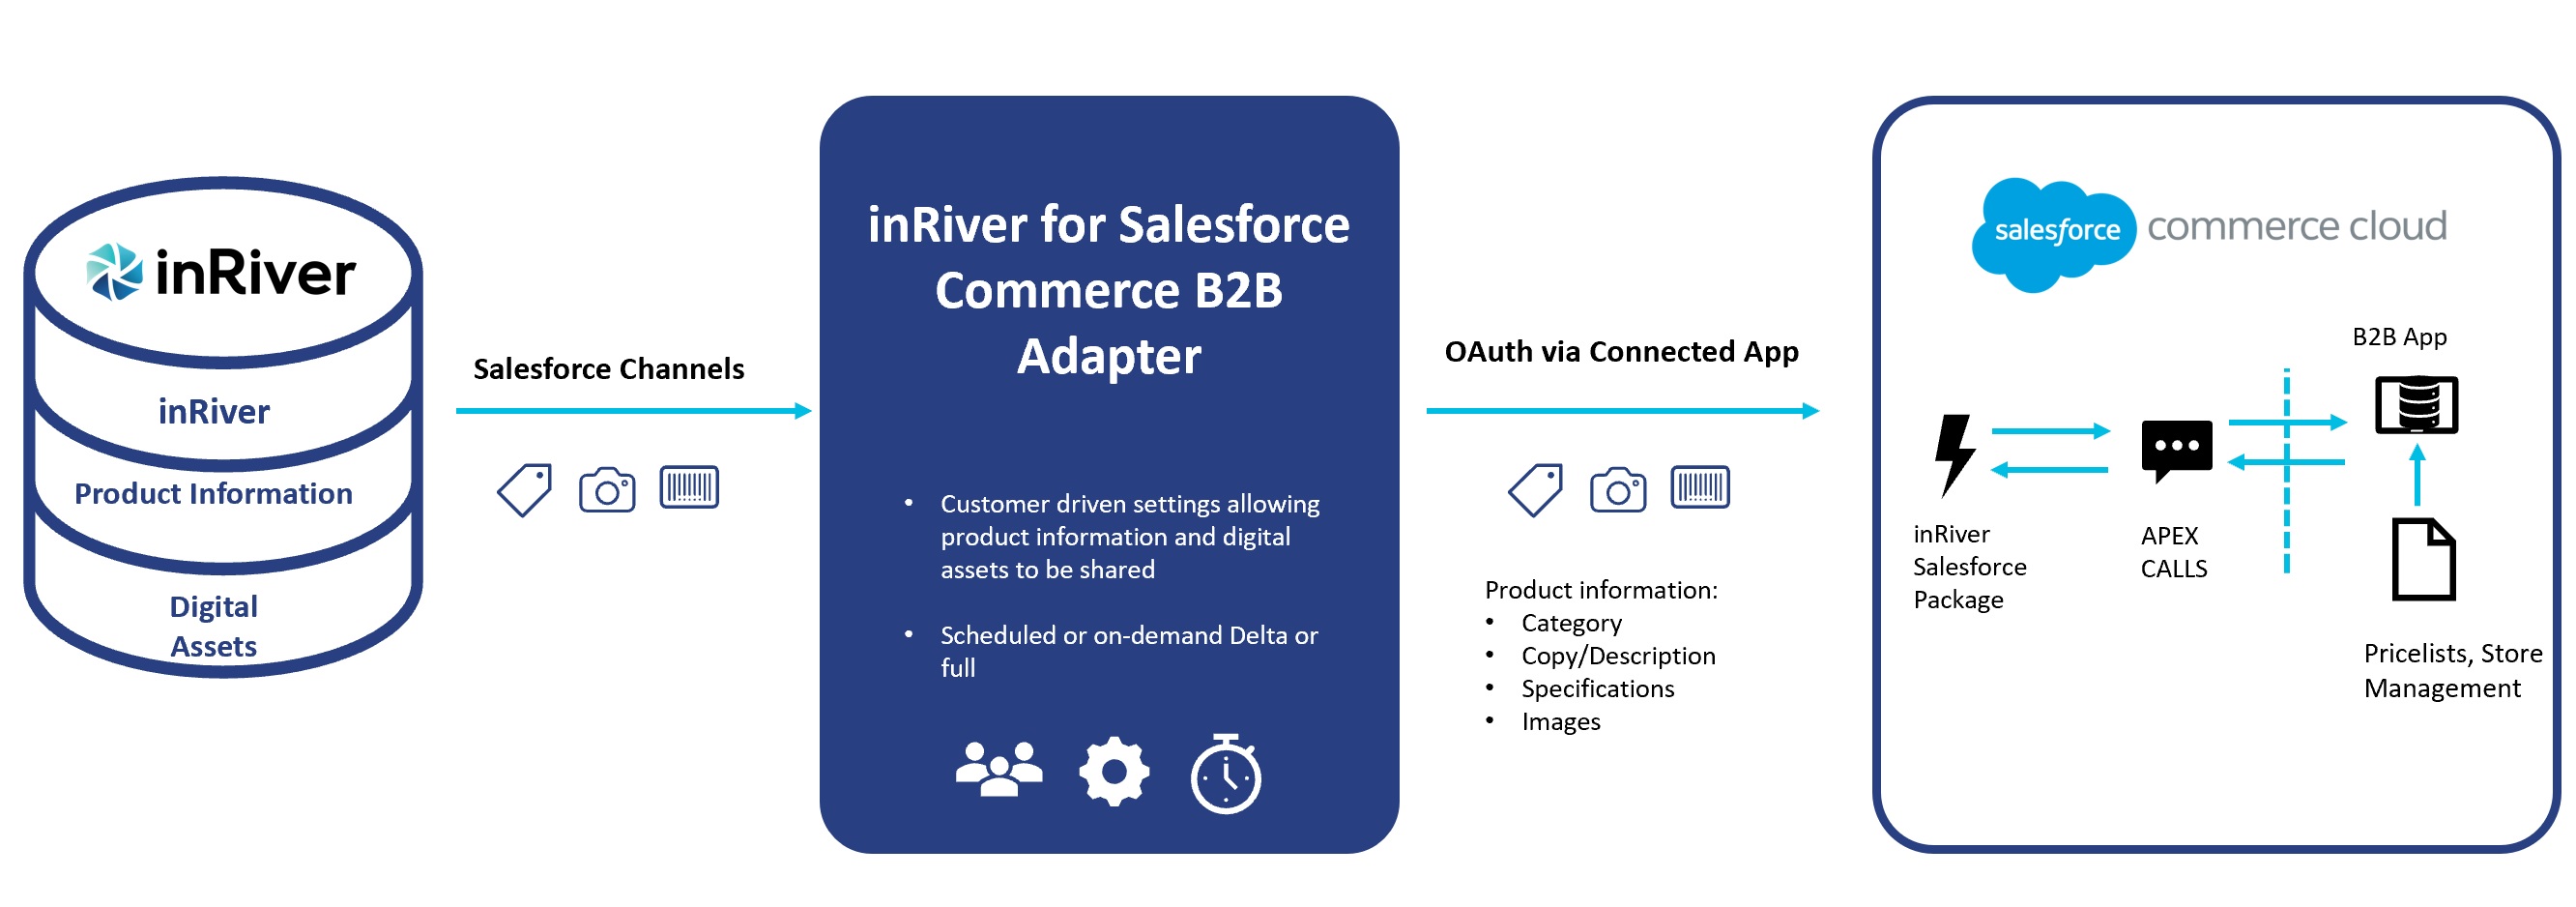 salesforce_B2B_overview.jpg